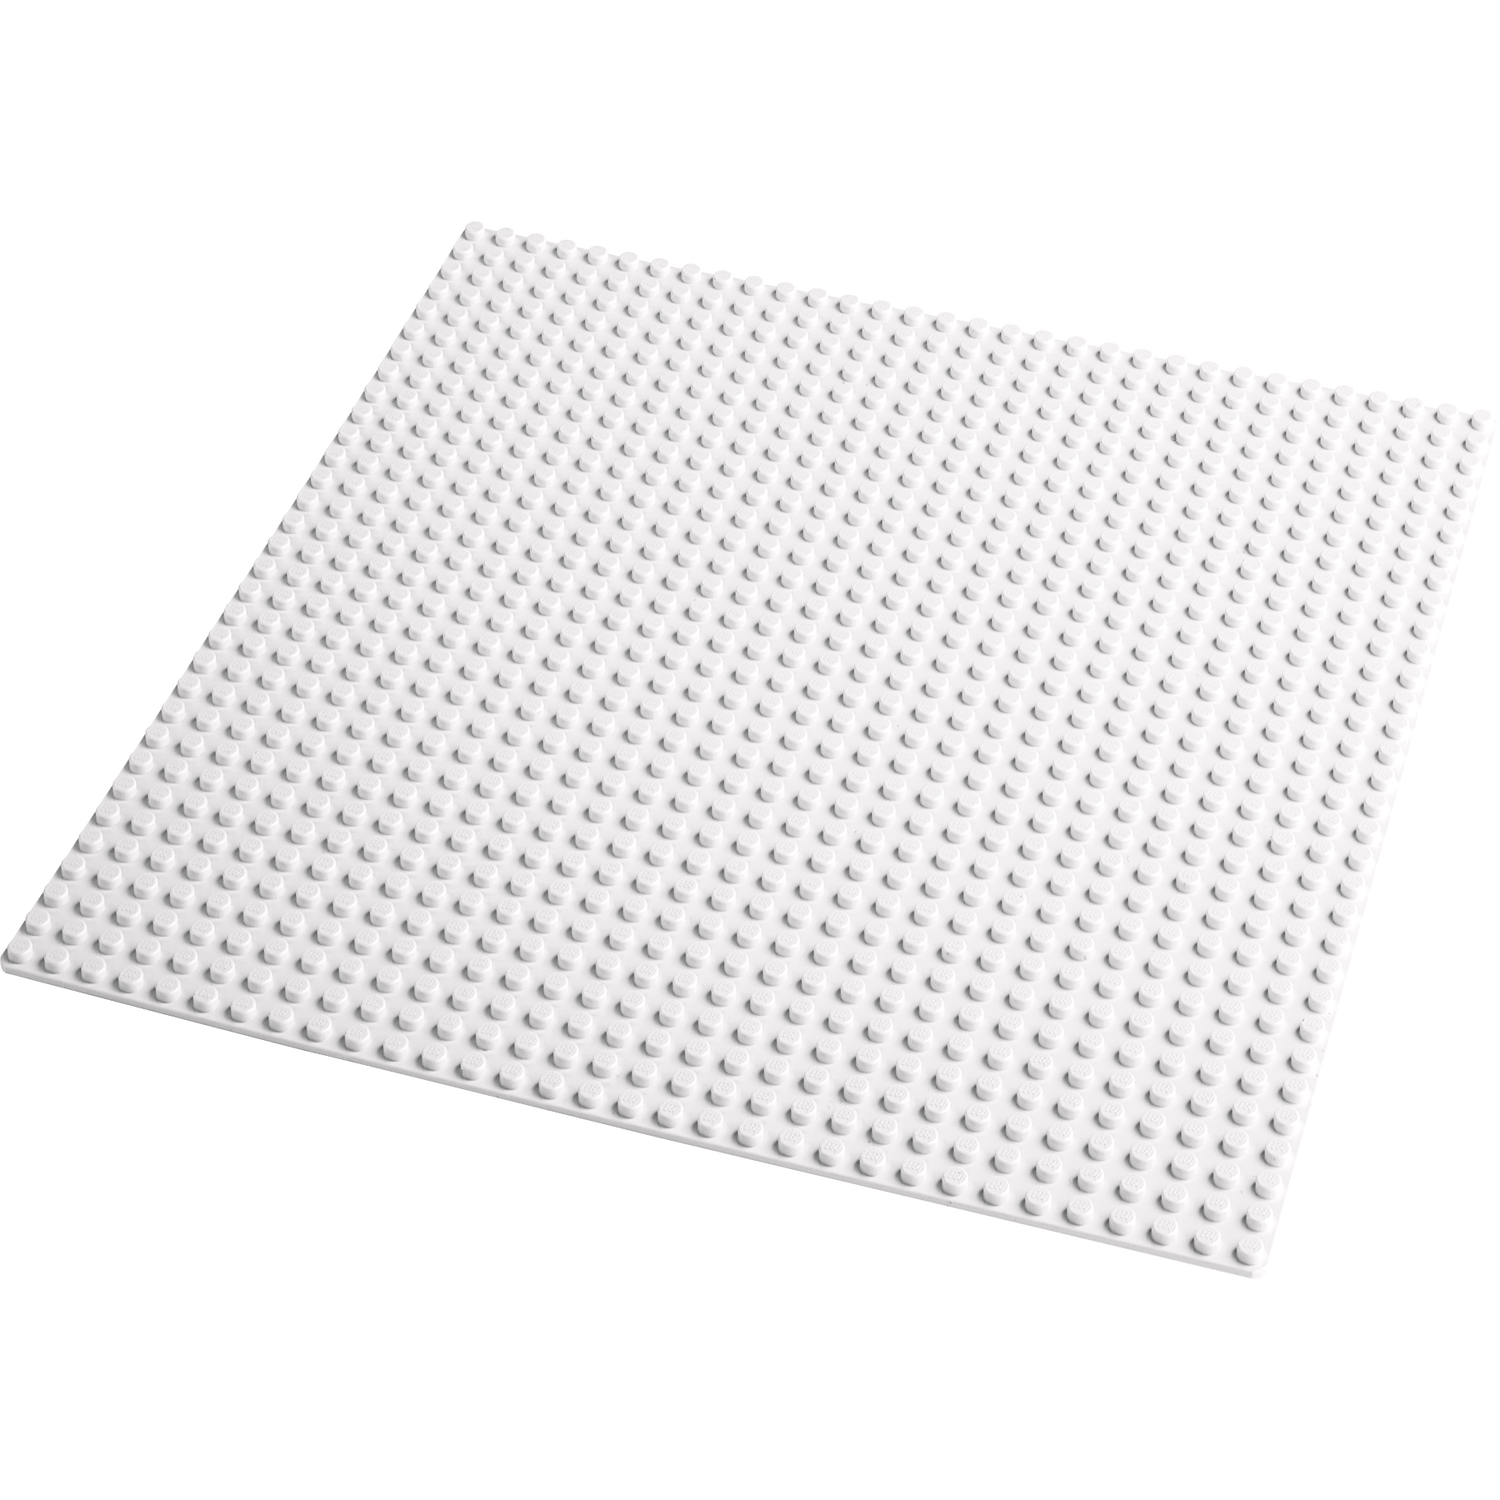 LEGO JBS1023 Plaque de base 16x16, blanche